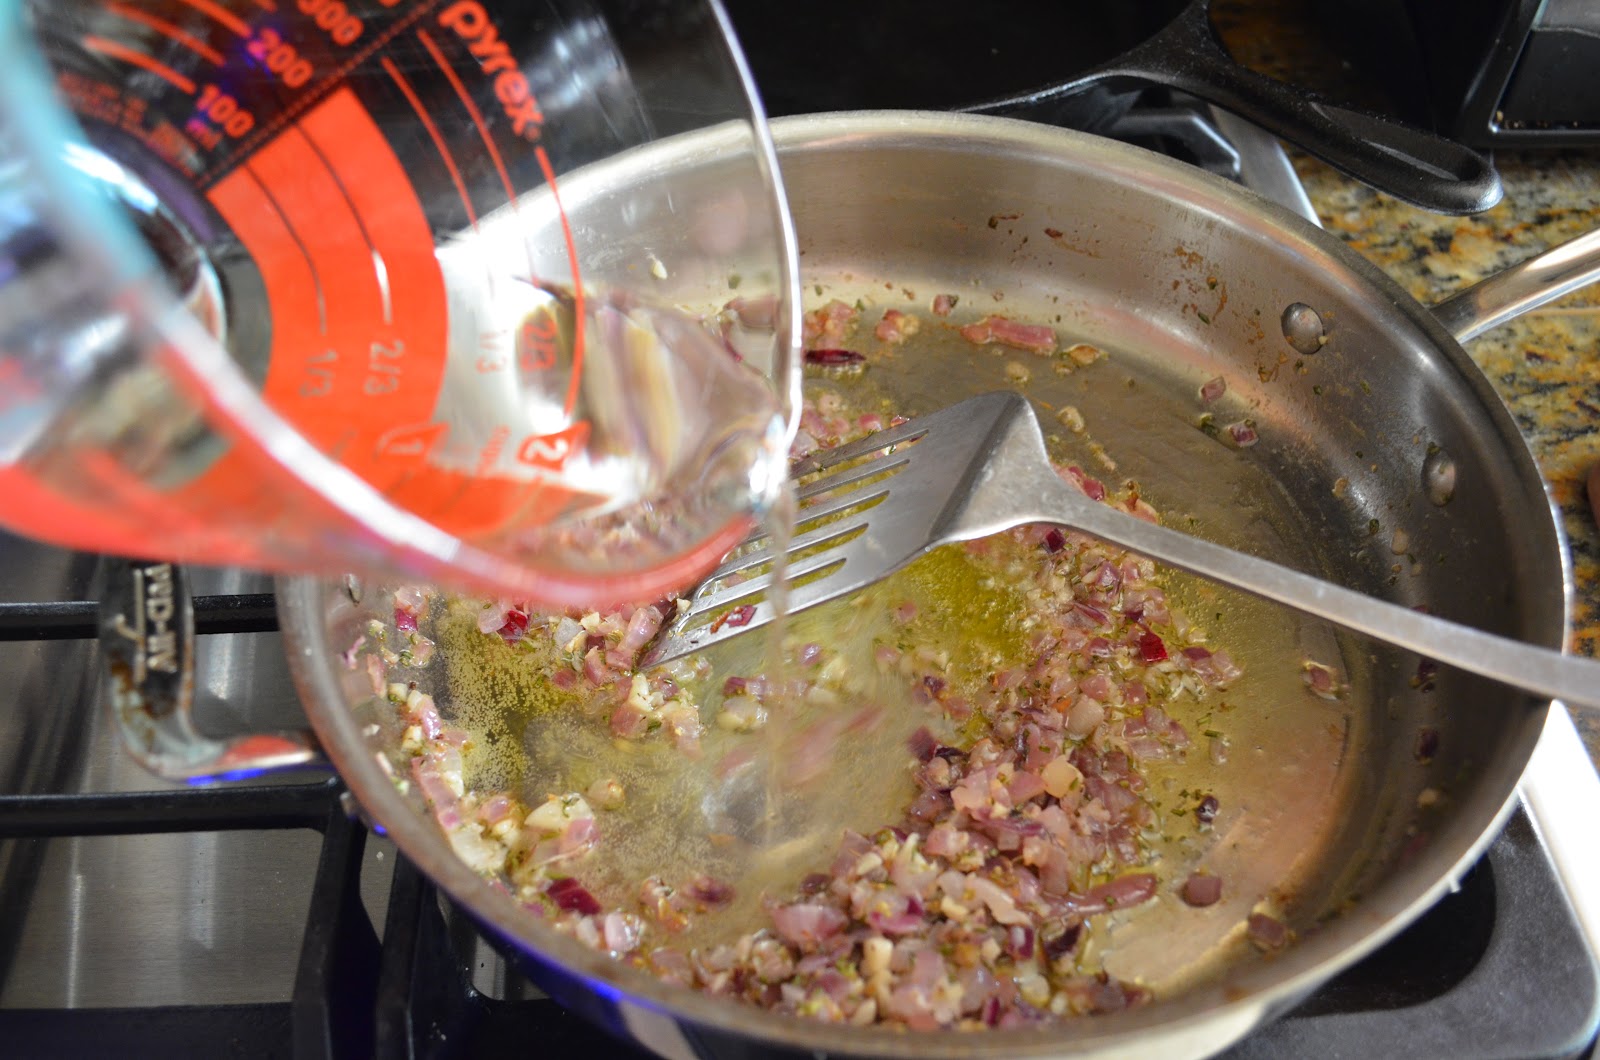 Roasted-Tomato-Pasta-Recipe-Onions-Oregano-Thyme-Rosemary-Butter-Olive-Oil.jpg